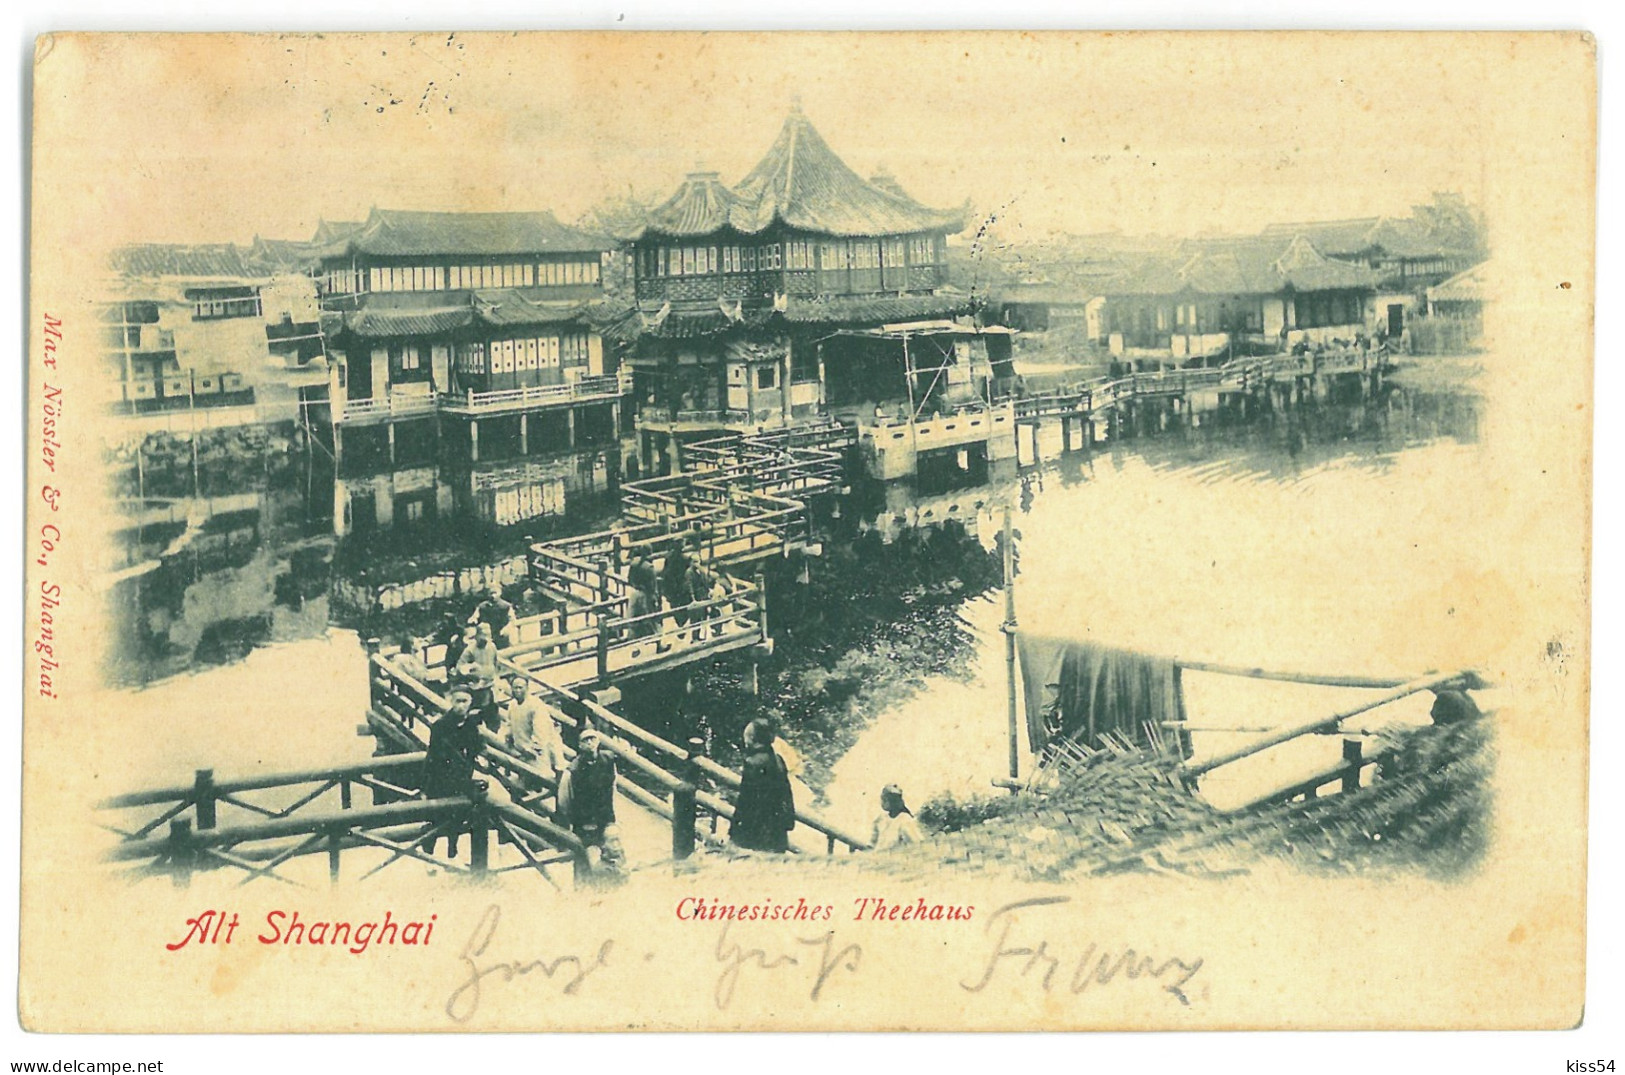 CH 12 - 23900 SHANGHAI, Teahouse, Litho, China - Old Postcard - Used - 1900 - China